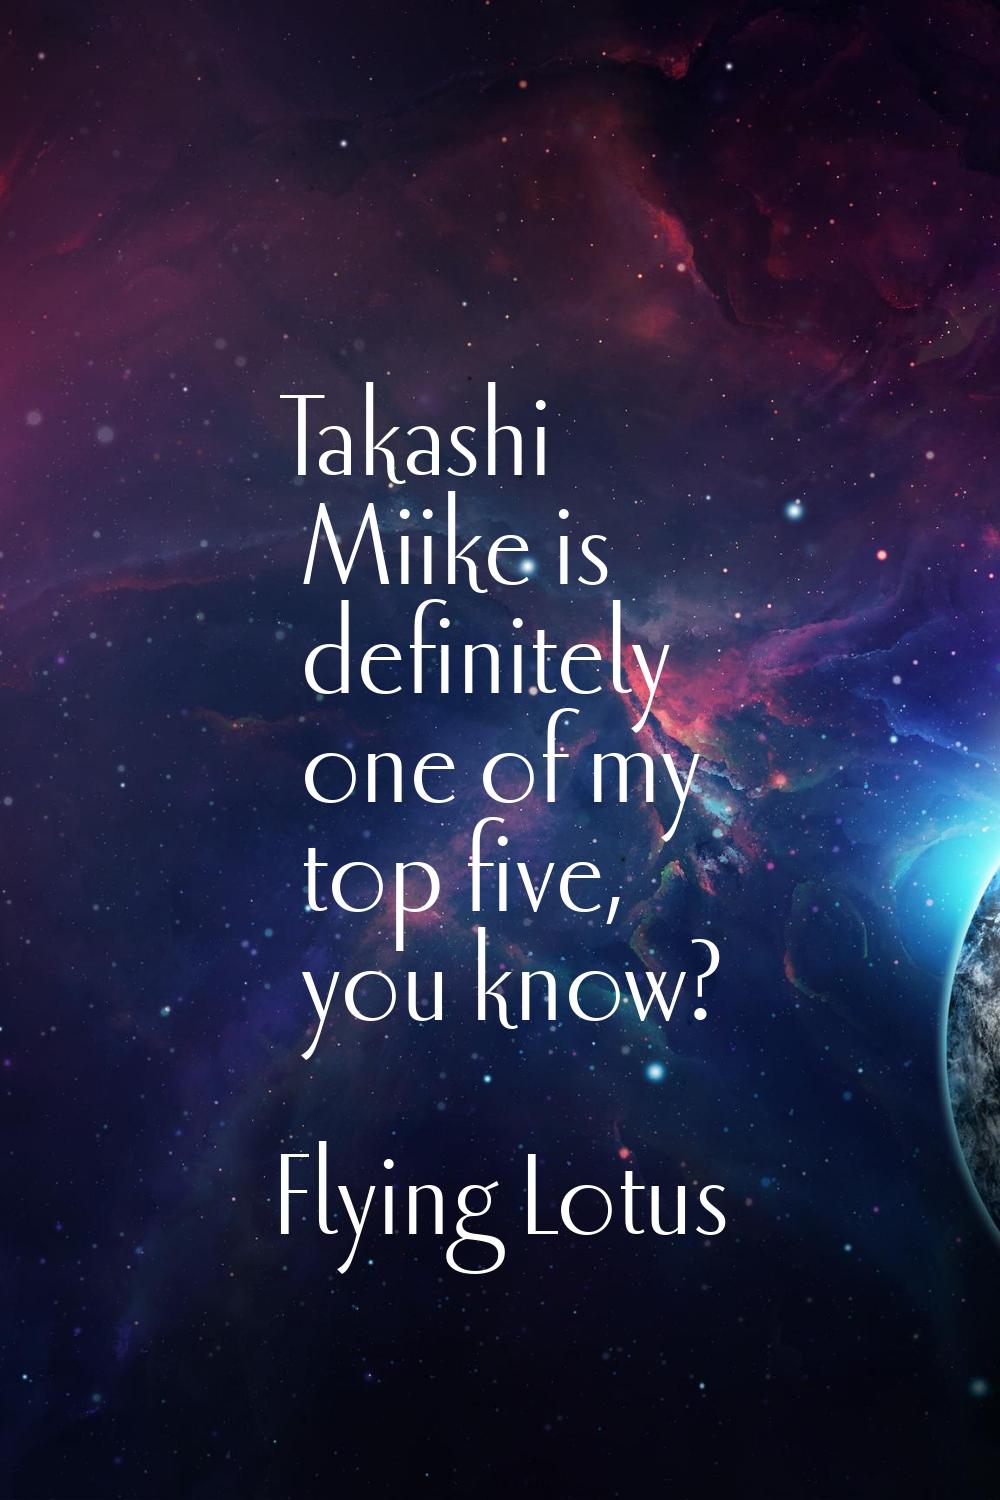 Takashi Miike is definitely one of my top five, you know?